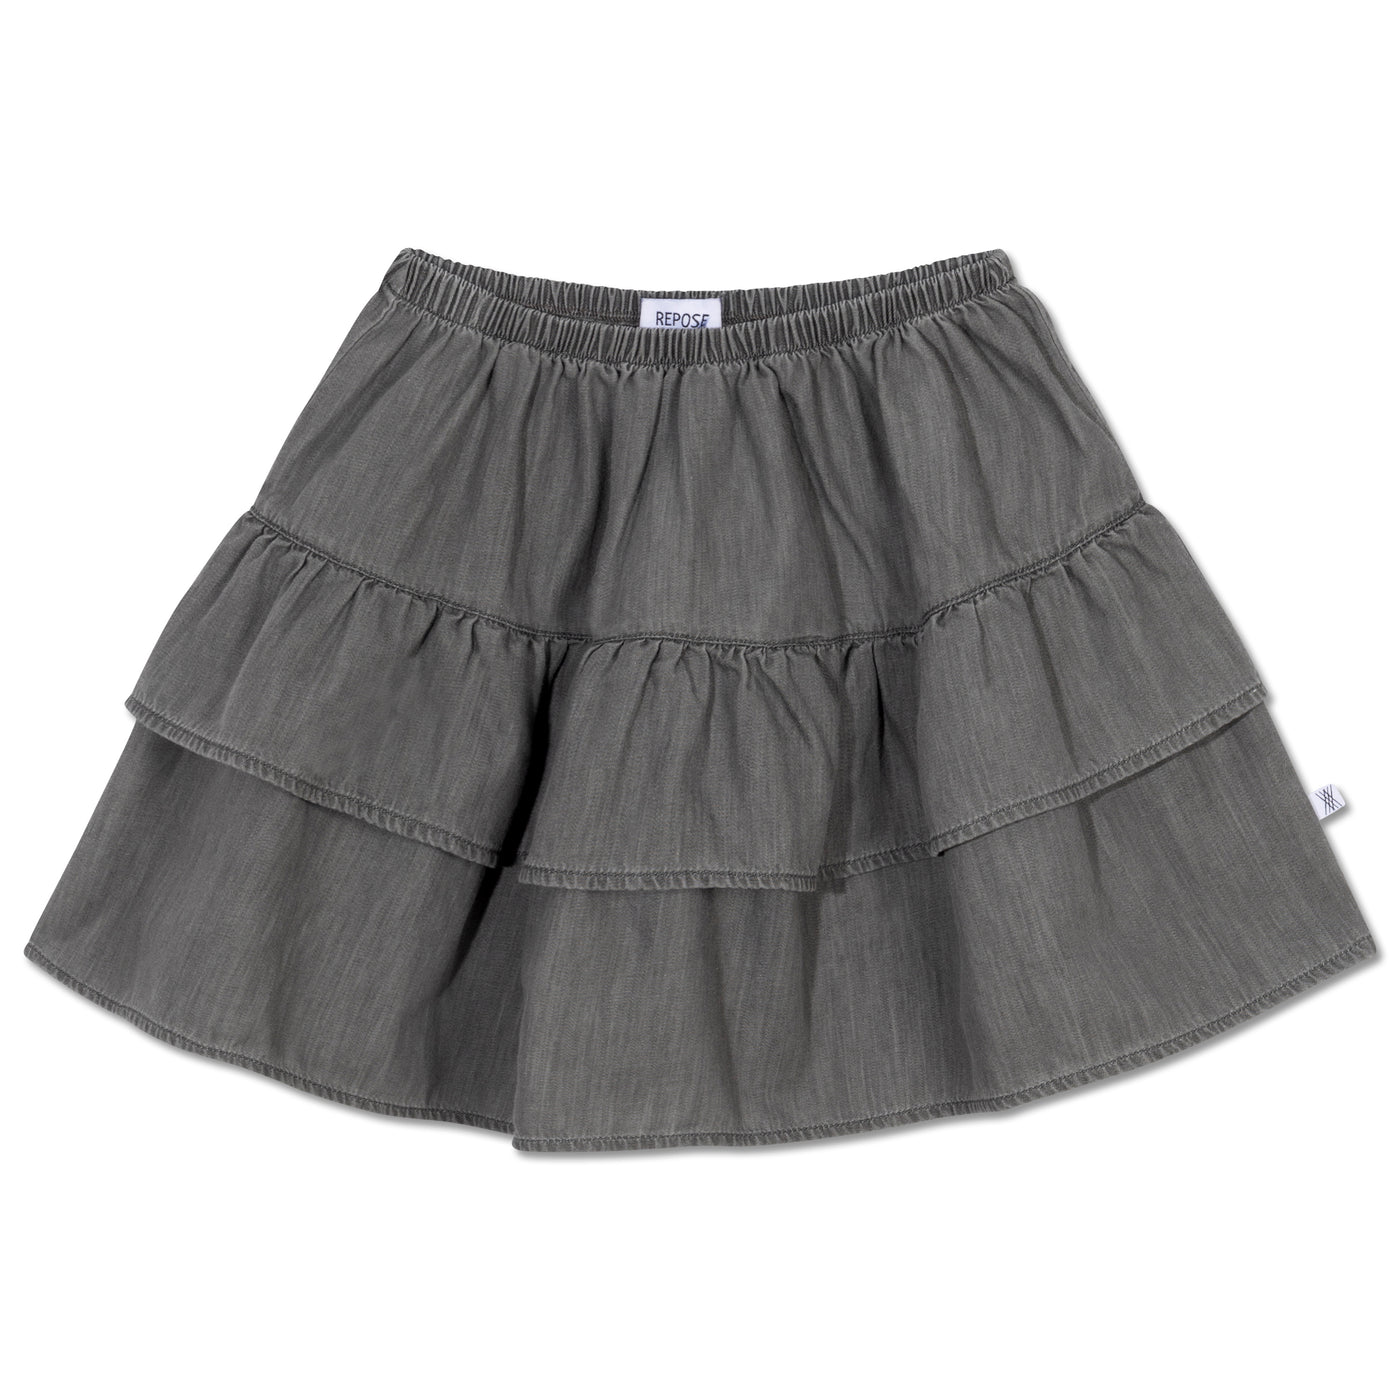 poet ruffle skirt - washed grey